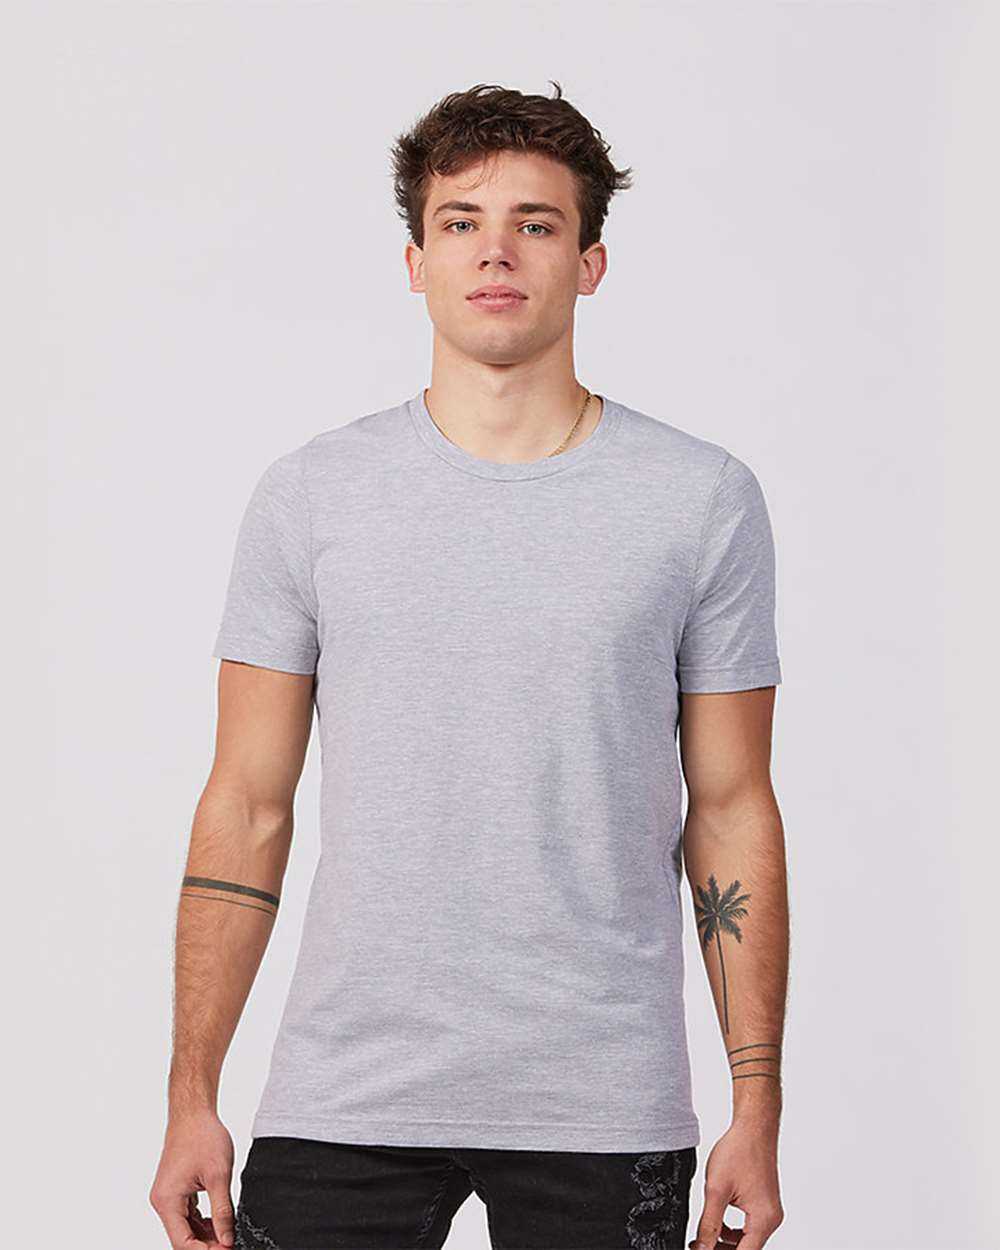 Tultex 502 Premium Cotton T-Shirt - Heather Grey - HIT a Double